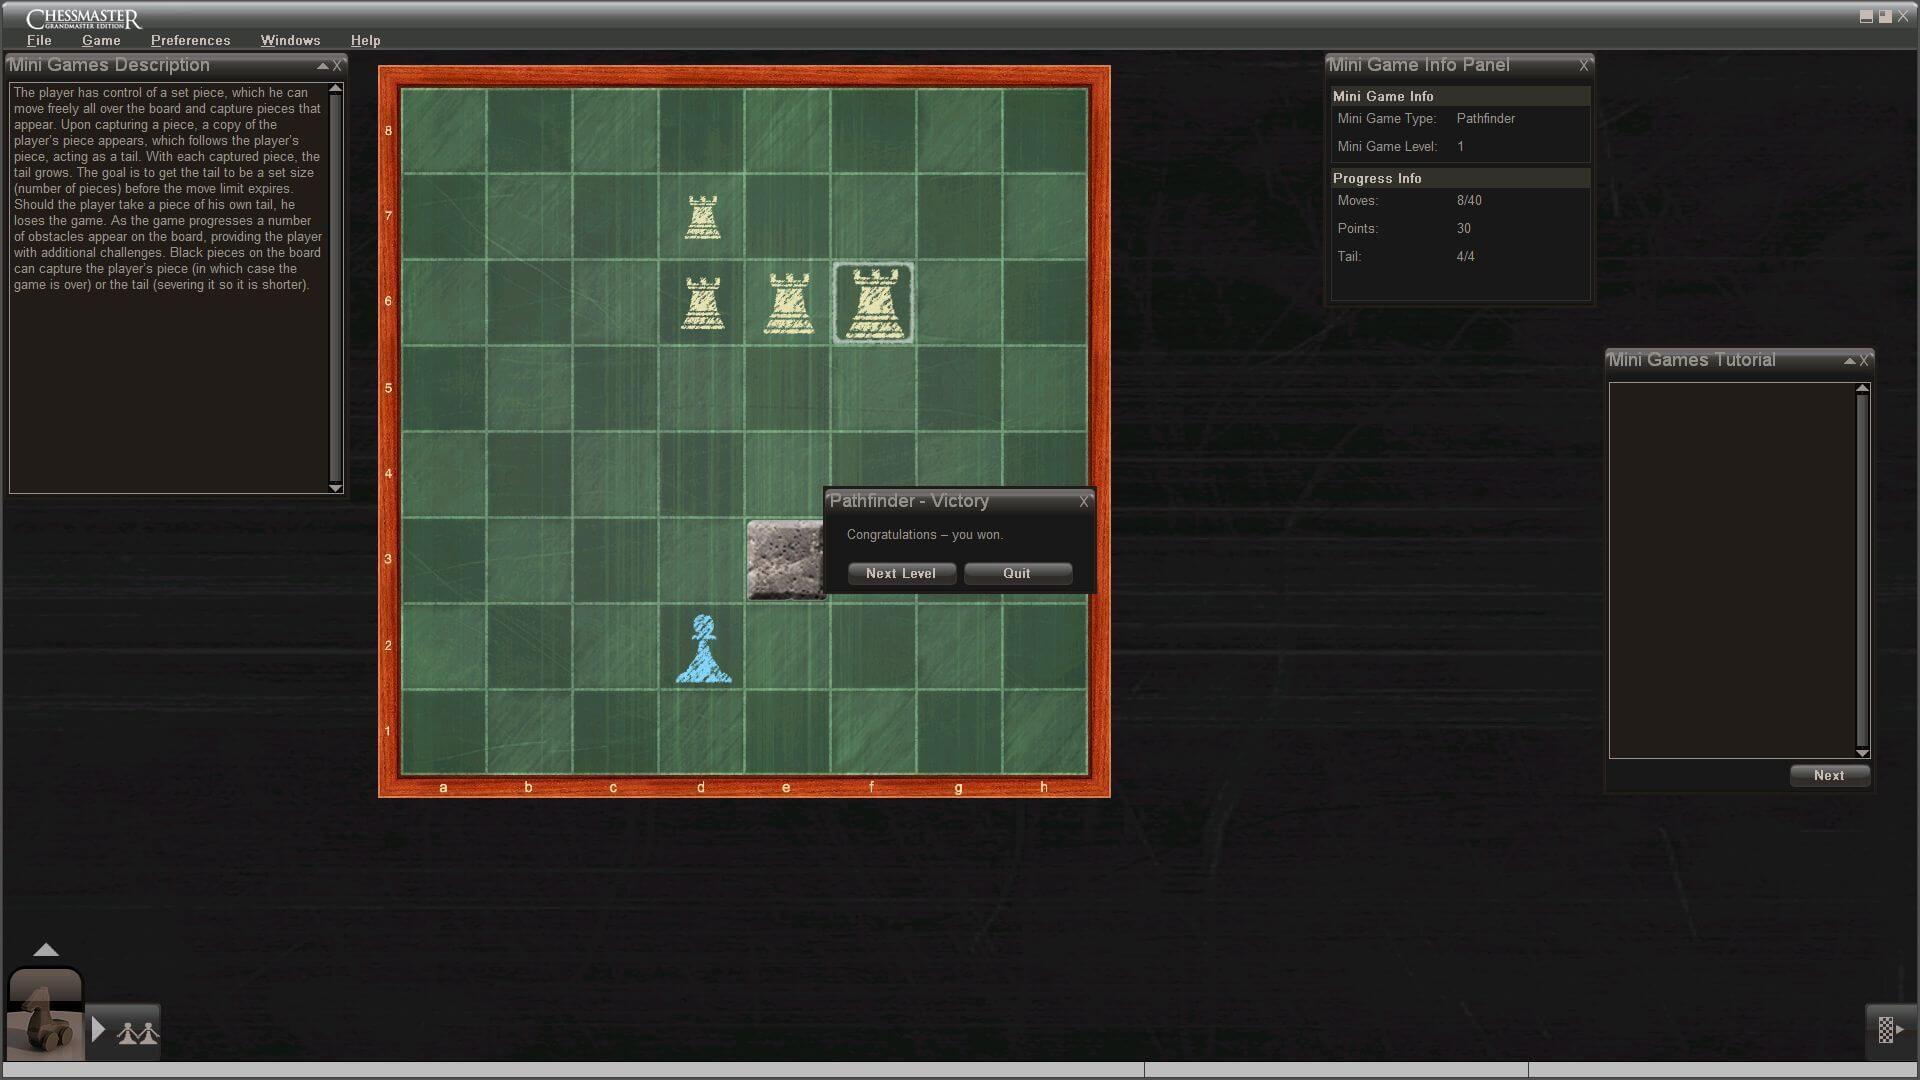 Chessmaster Grandmaster Edition PC NEW OLD STOCK + Win 11 10 8 7  Compatibility